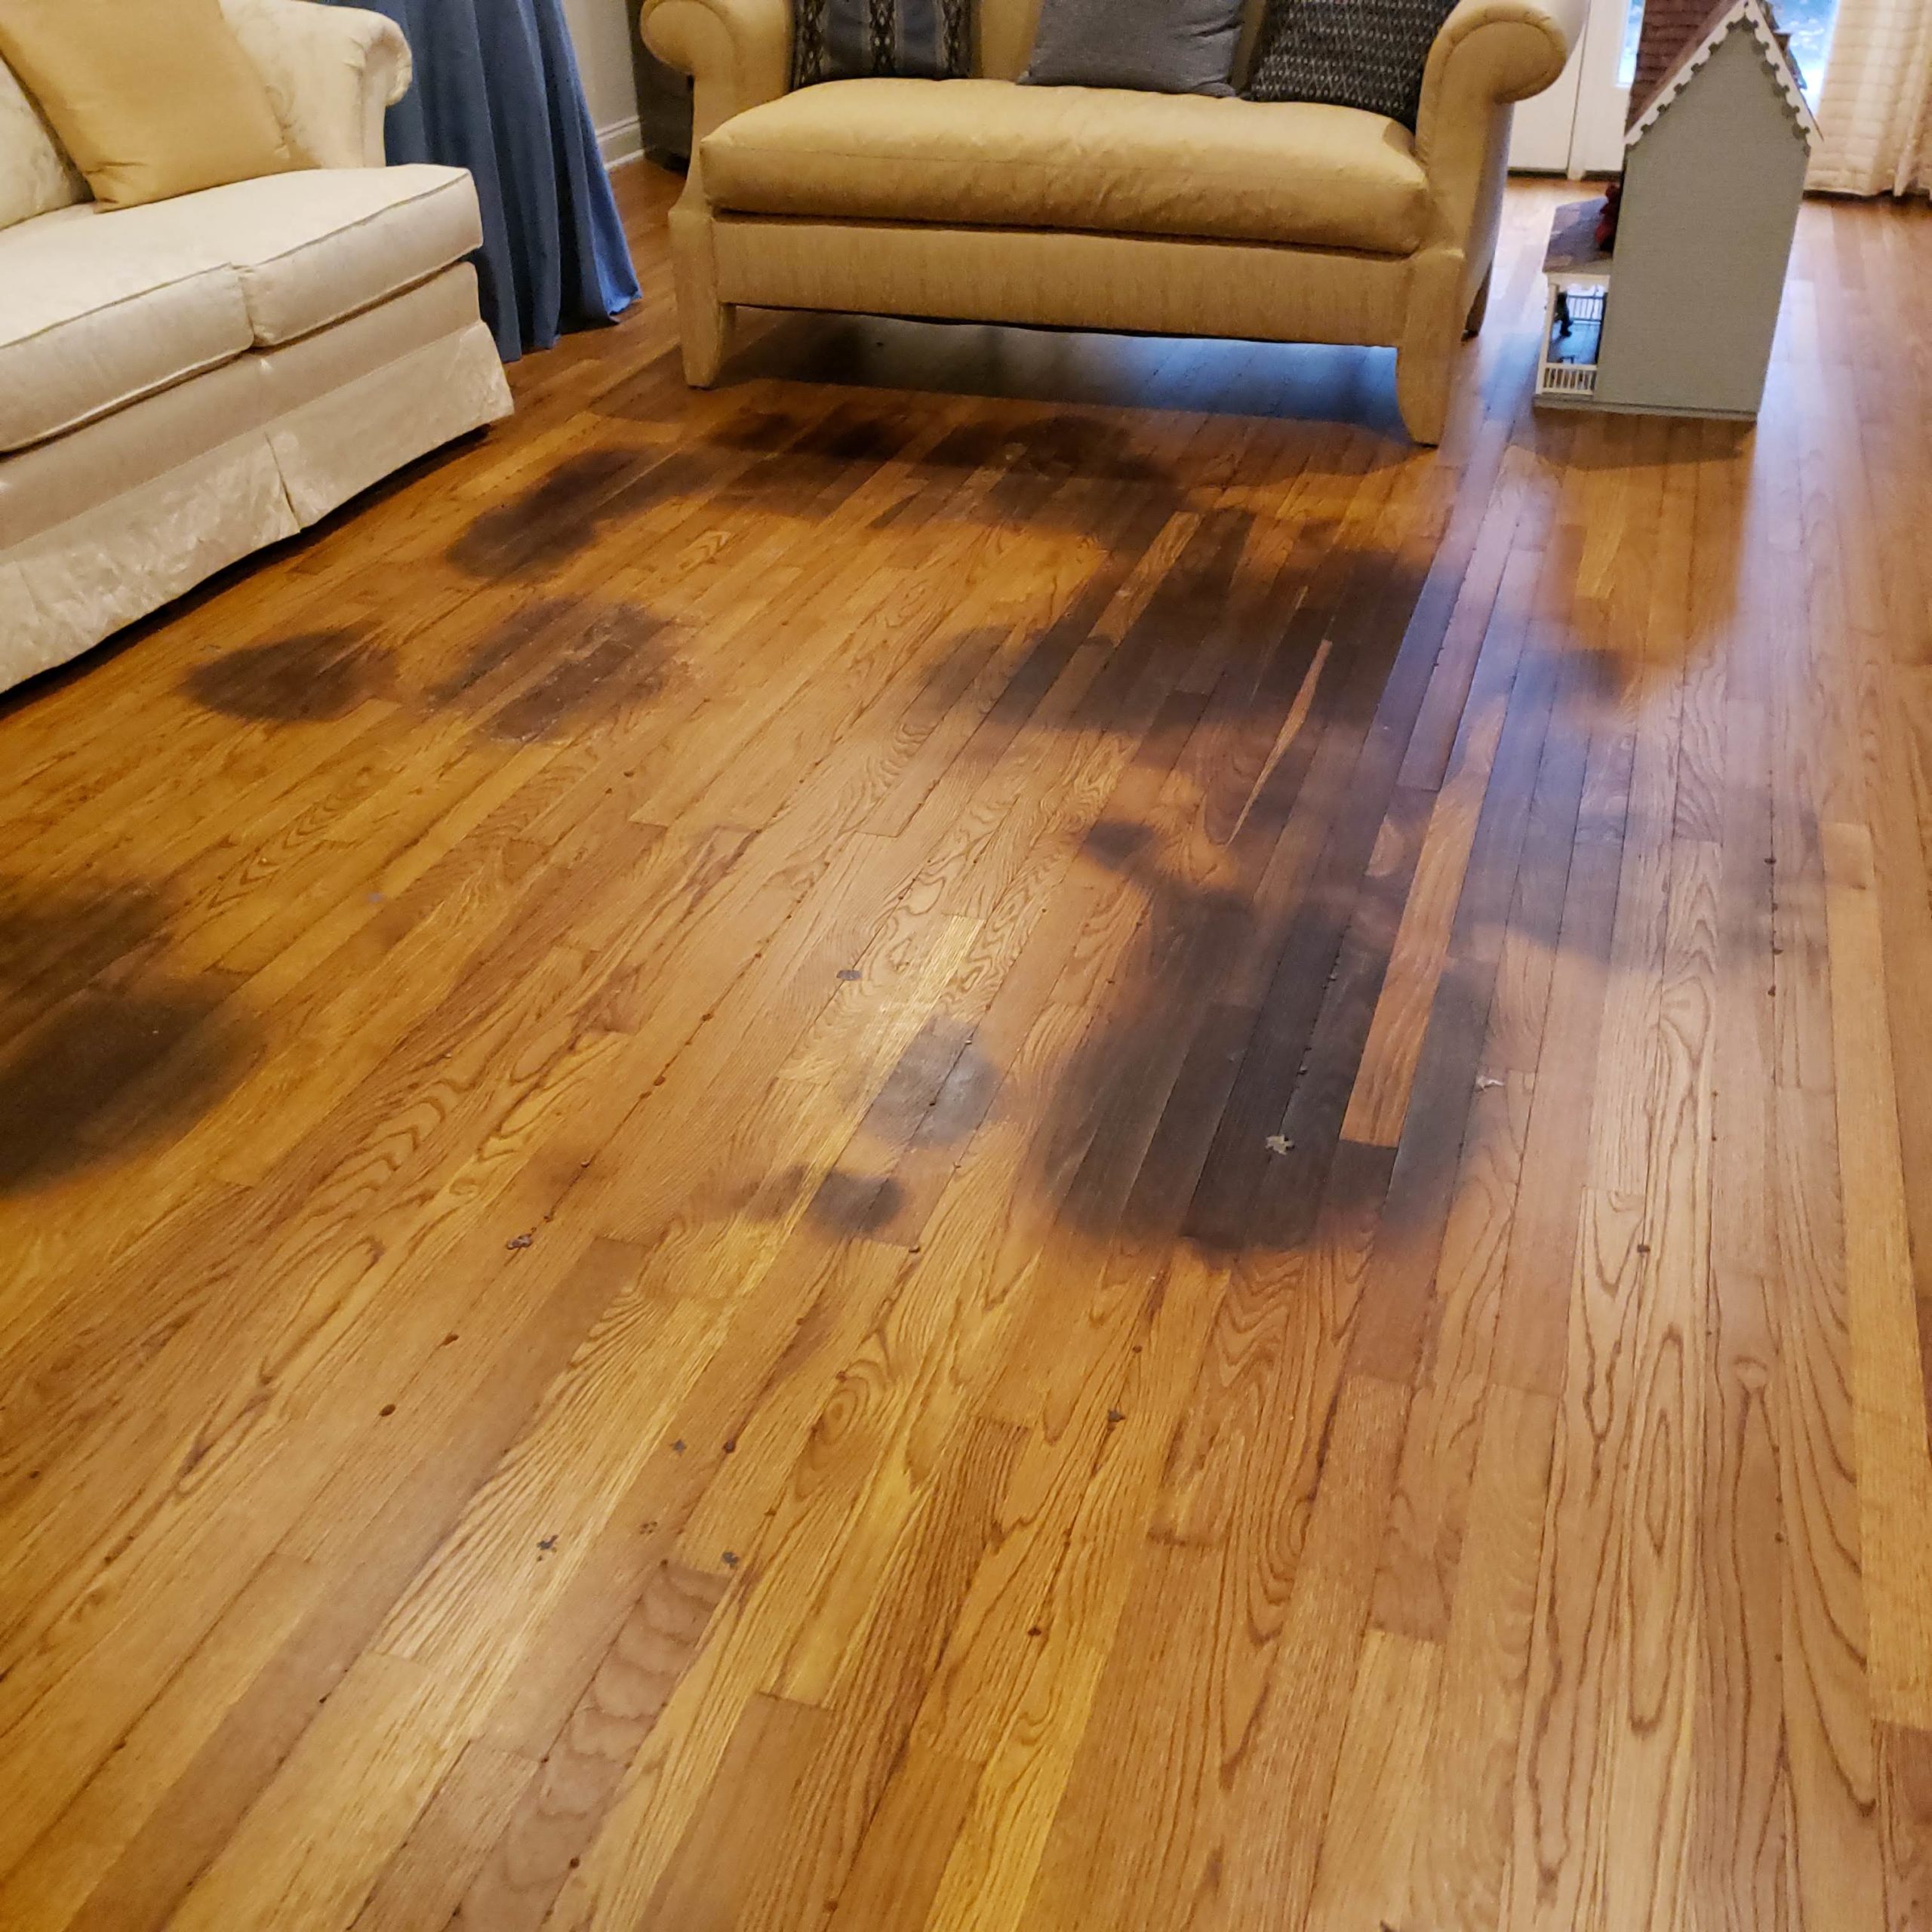 20191120_080242 Hardwood Floor Refinishing New Jersey Installation, Repair, sanding